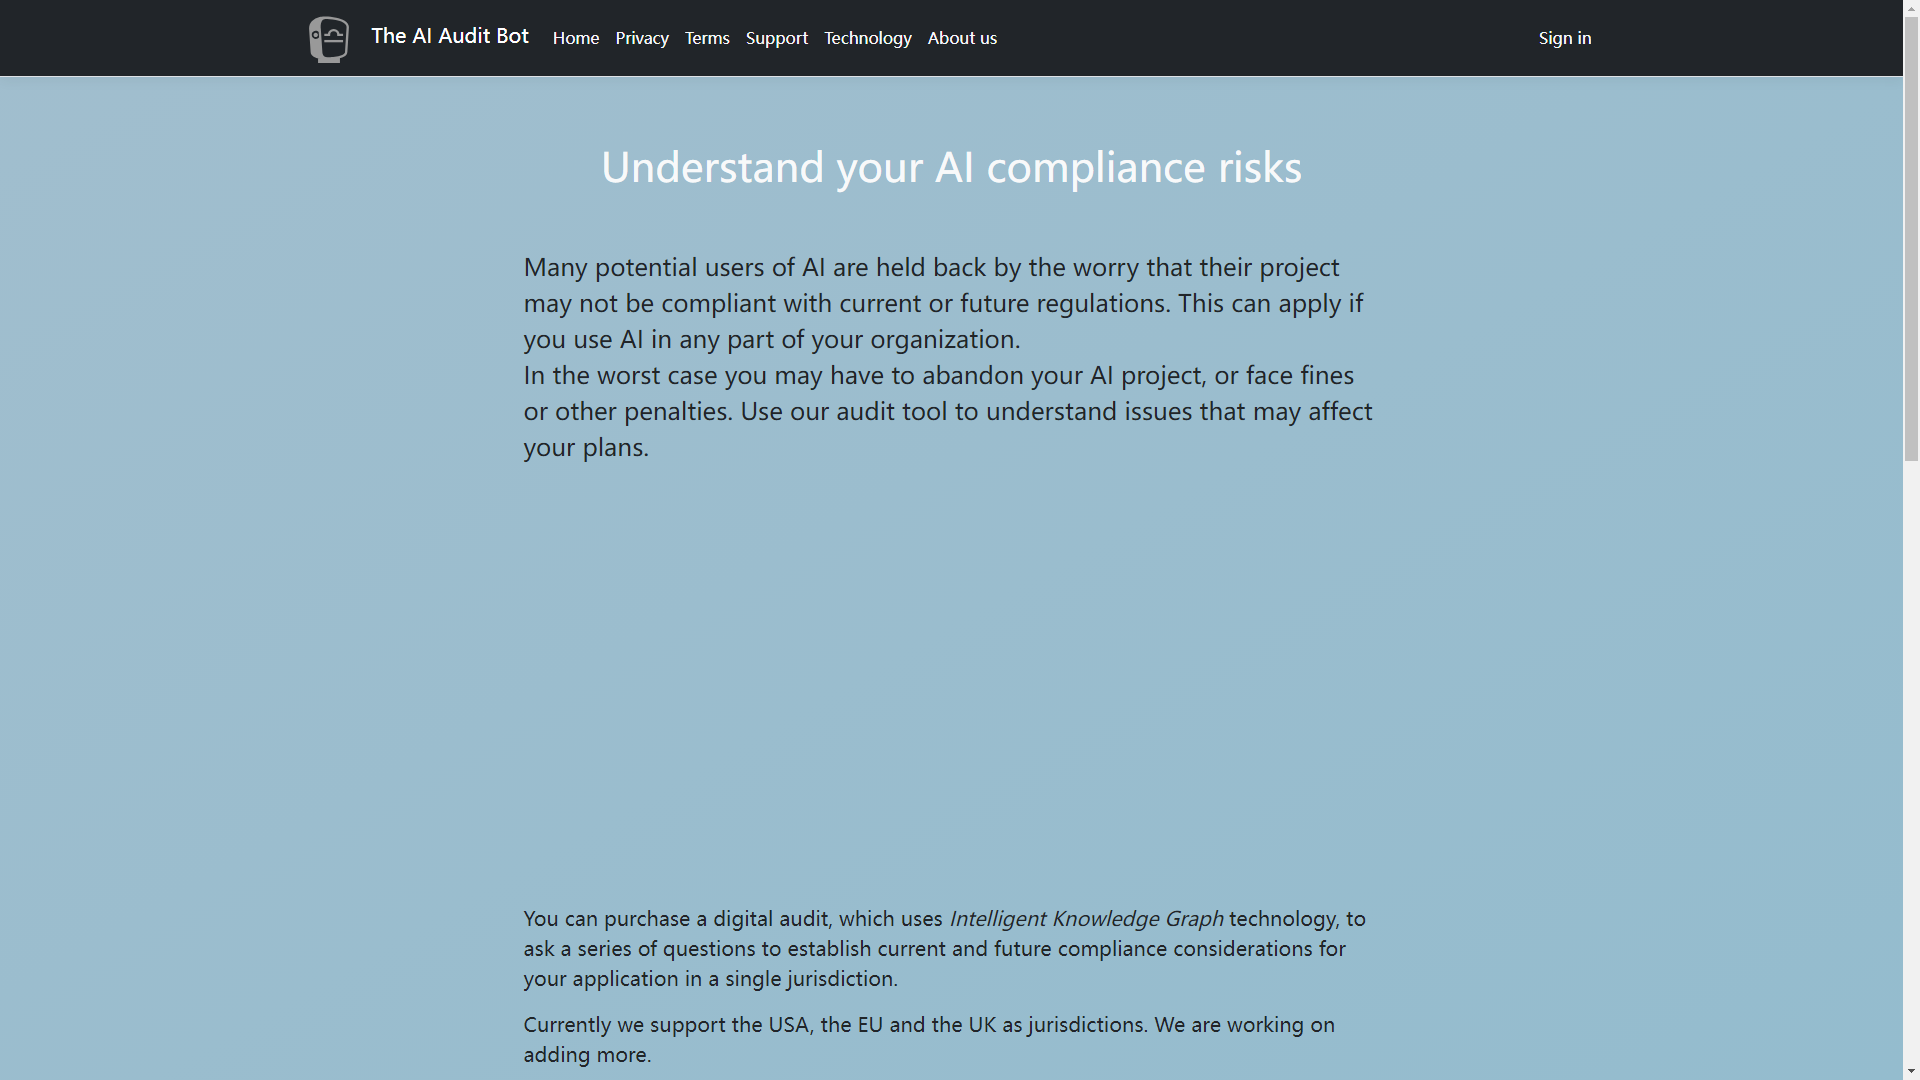 The AI Audit Bot